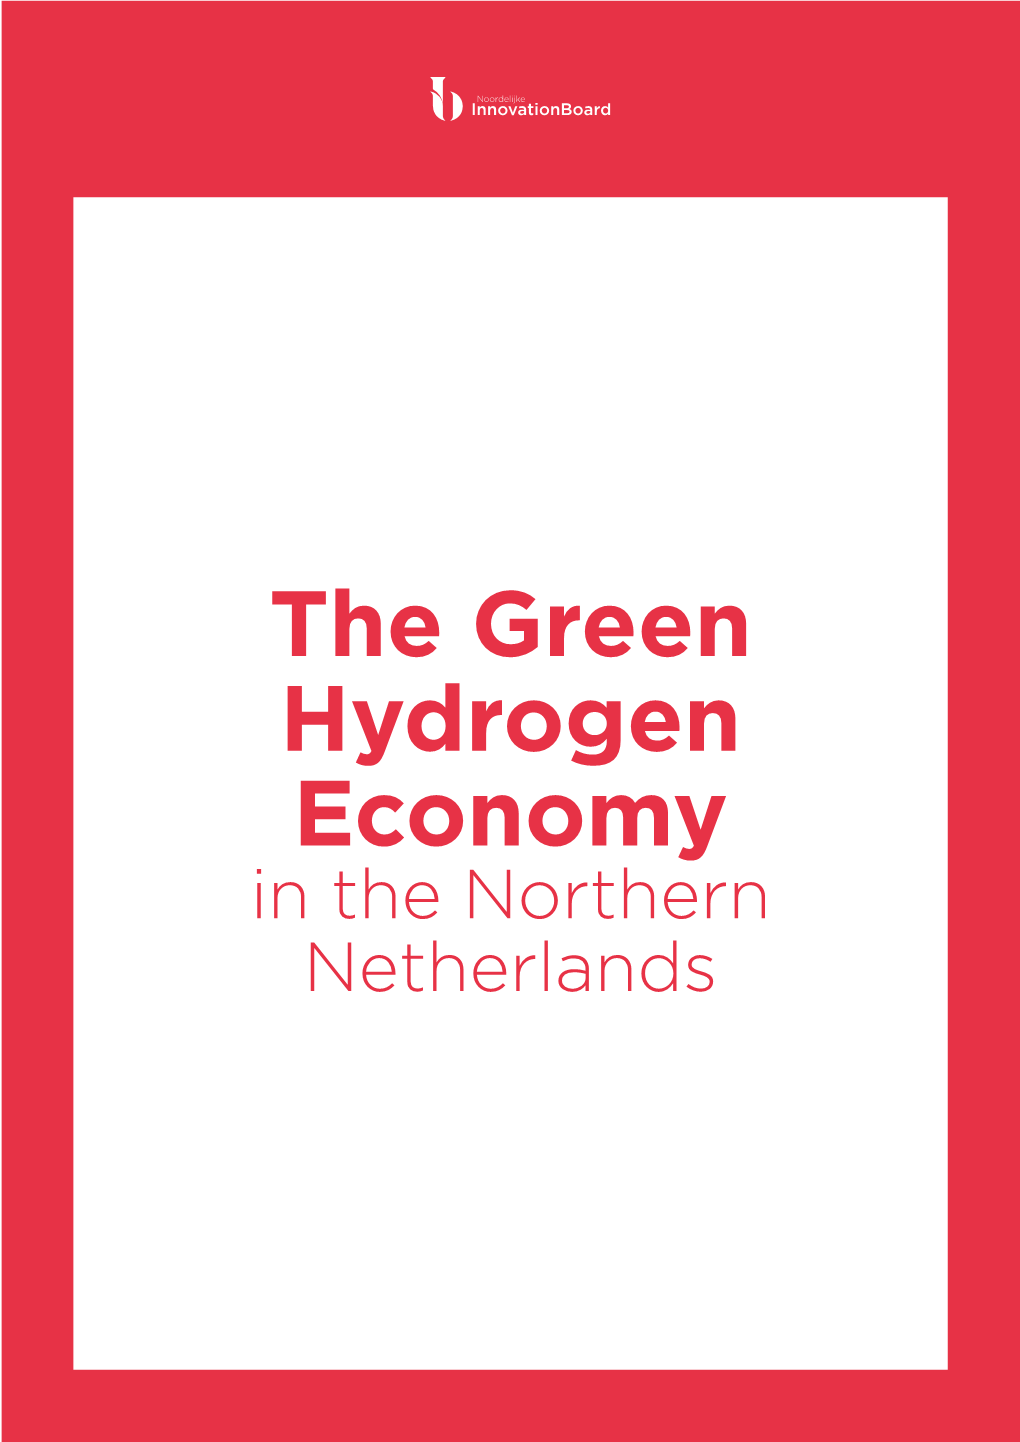 The Green Hydrogen Economy